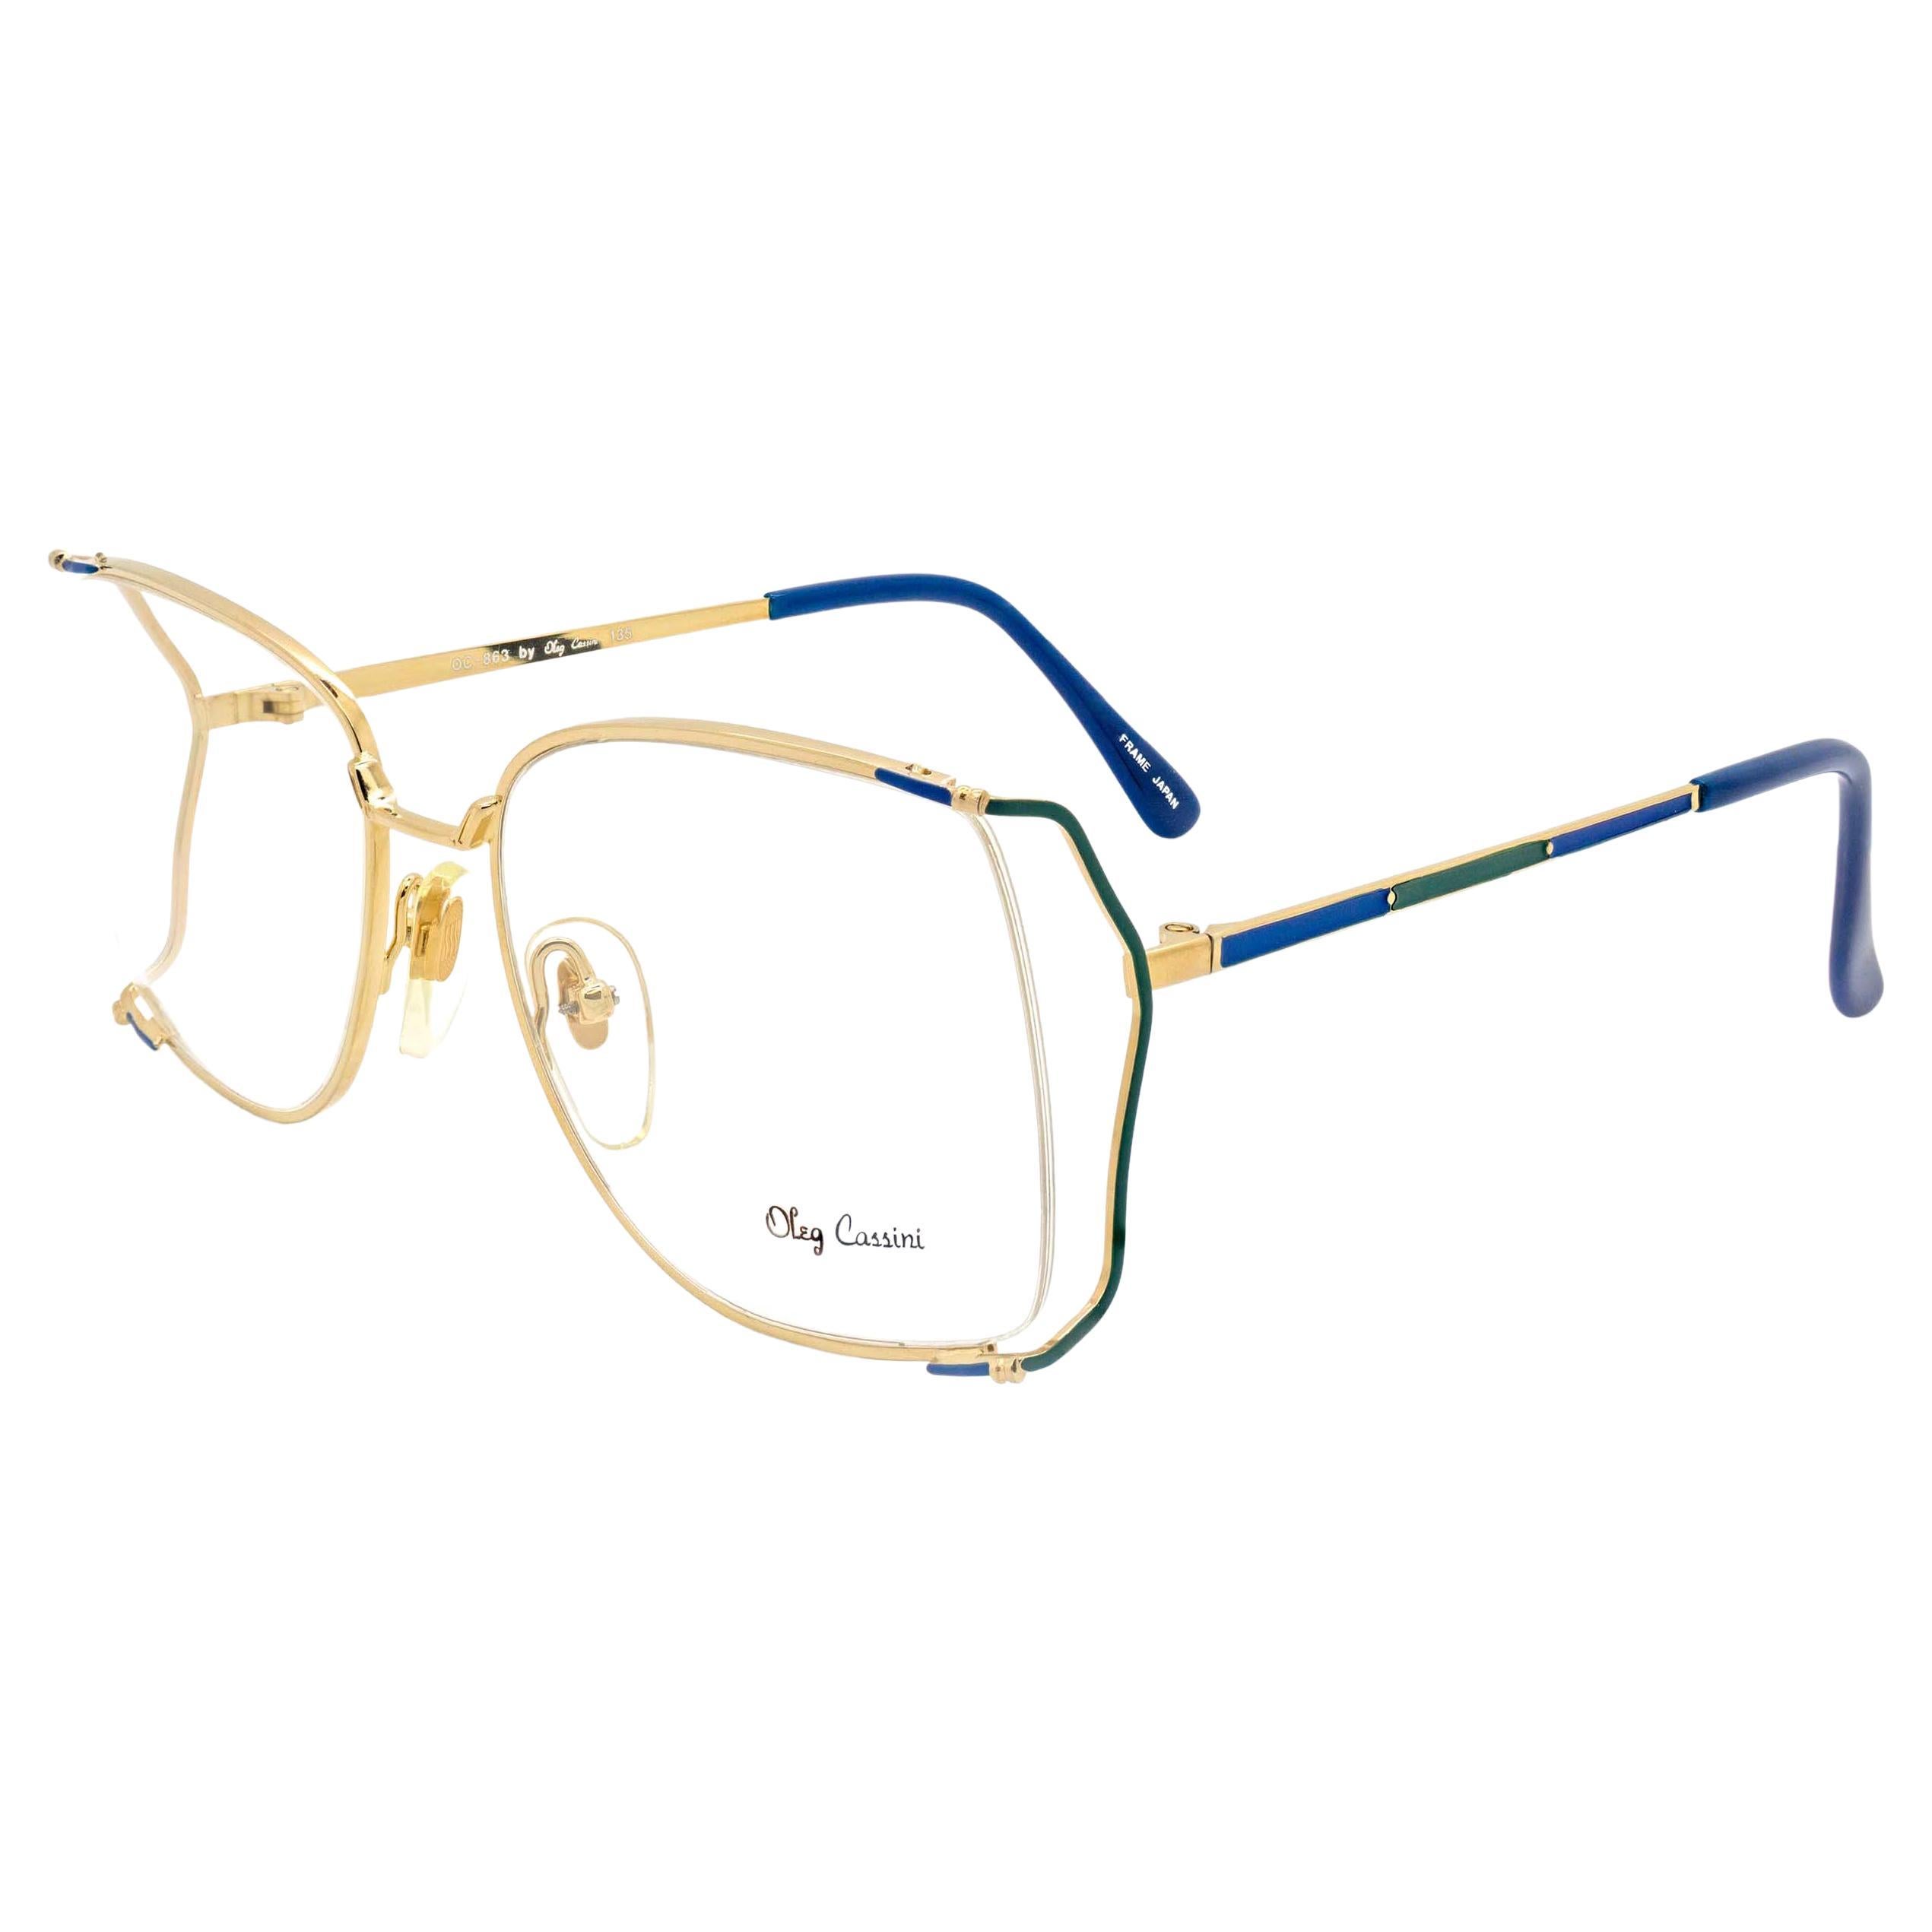 Oleg Cassini Japan vintage 70s eyeglasses frame For Sale at 1stDibs